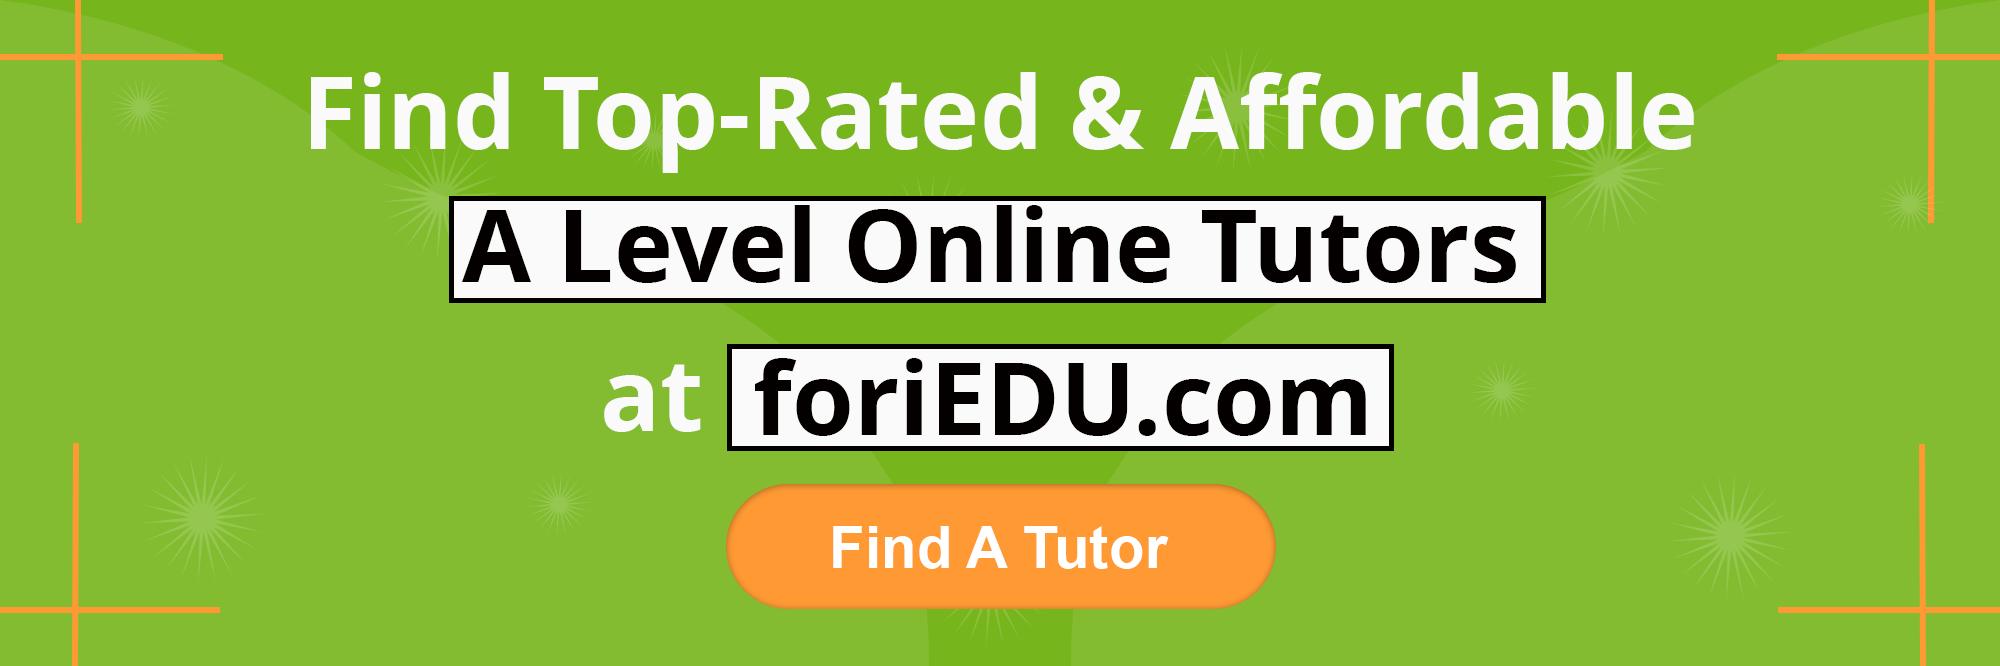 A Level online tutors 1